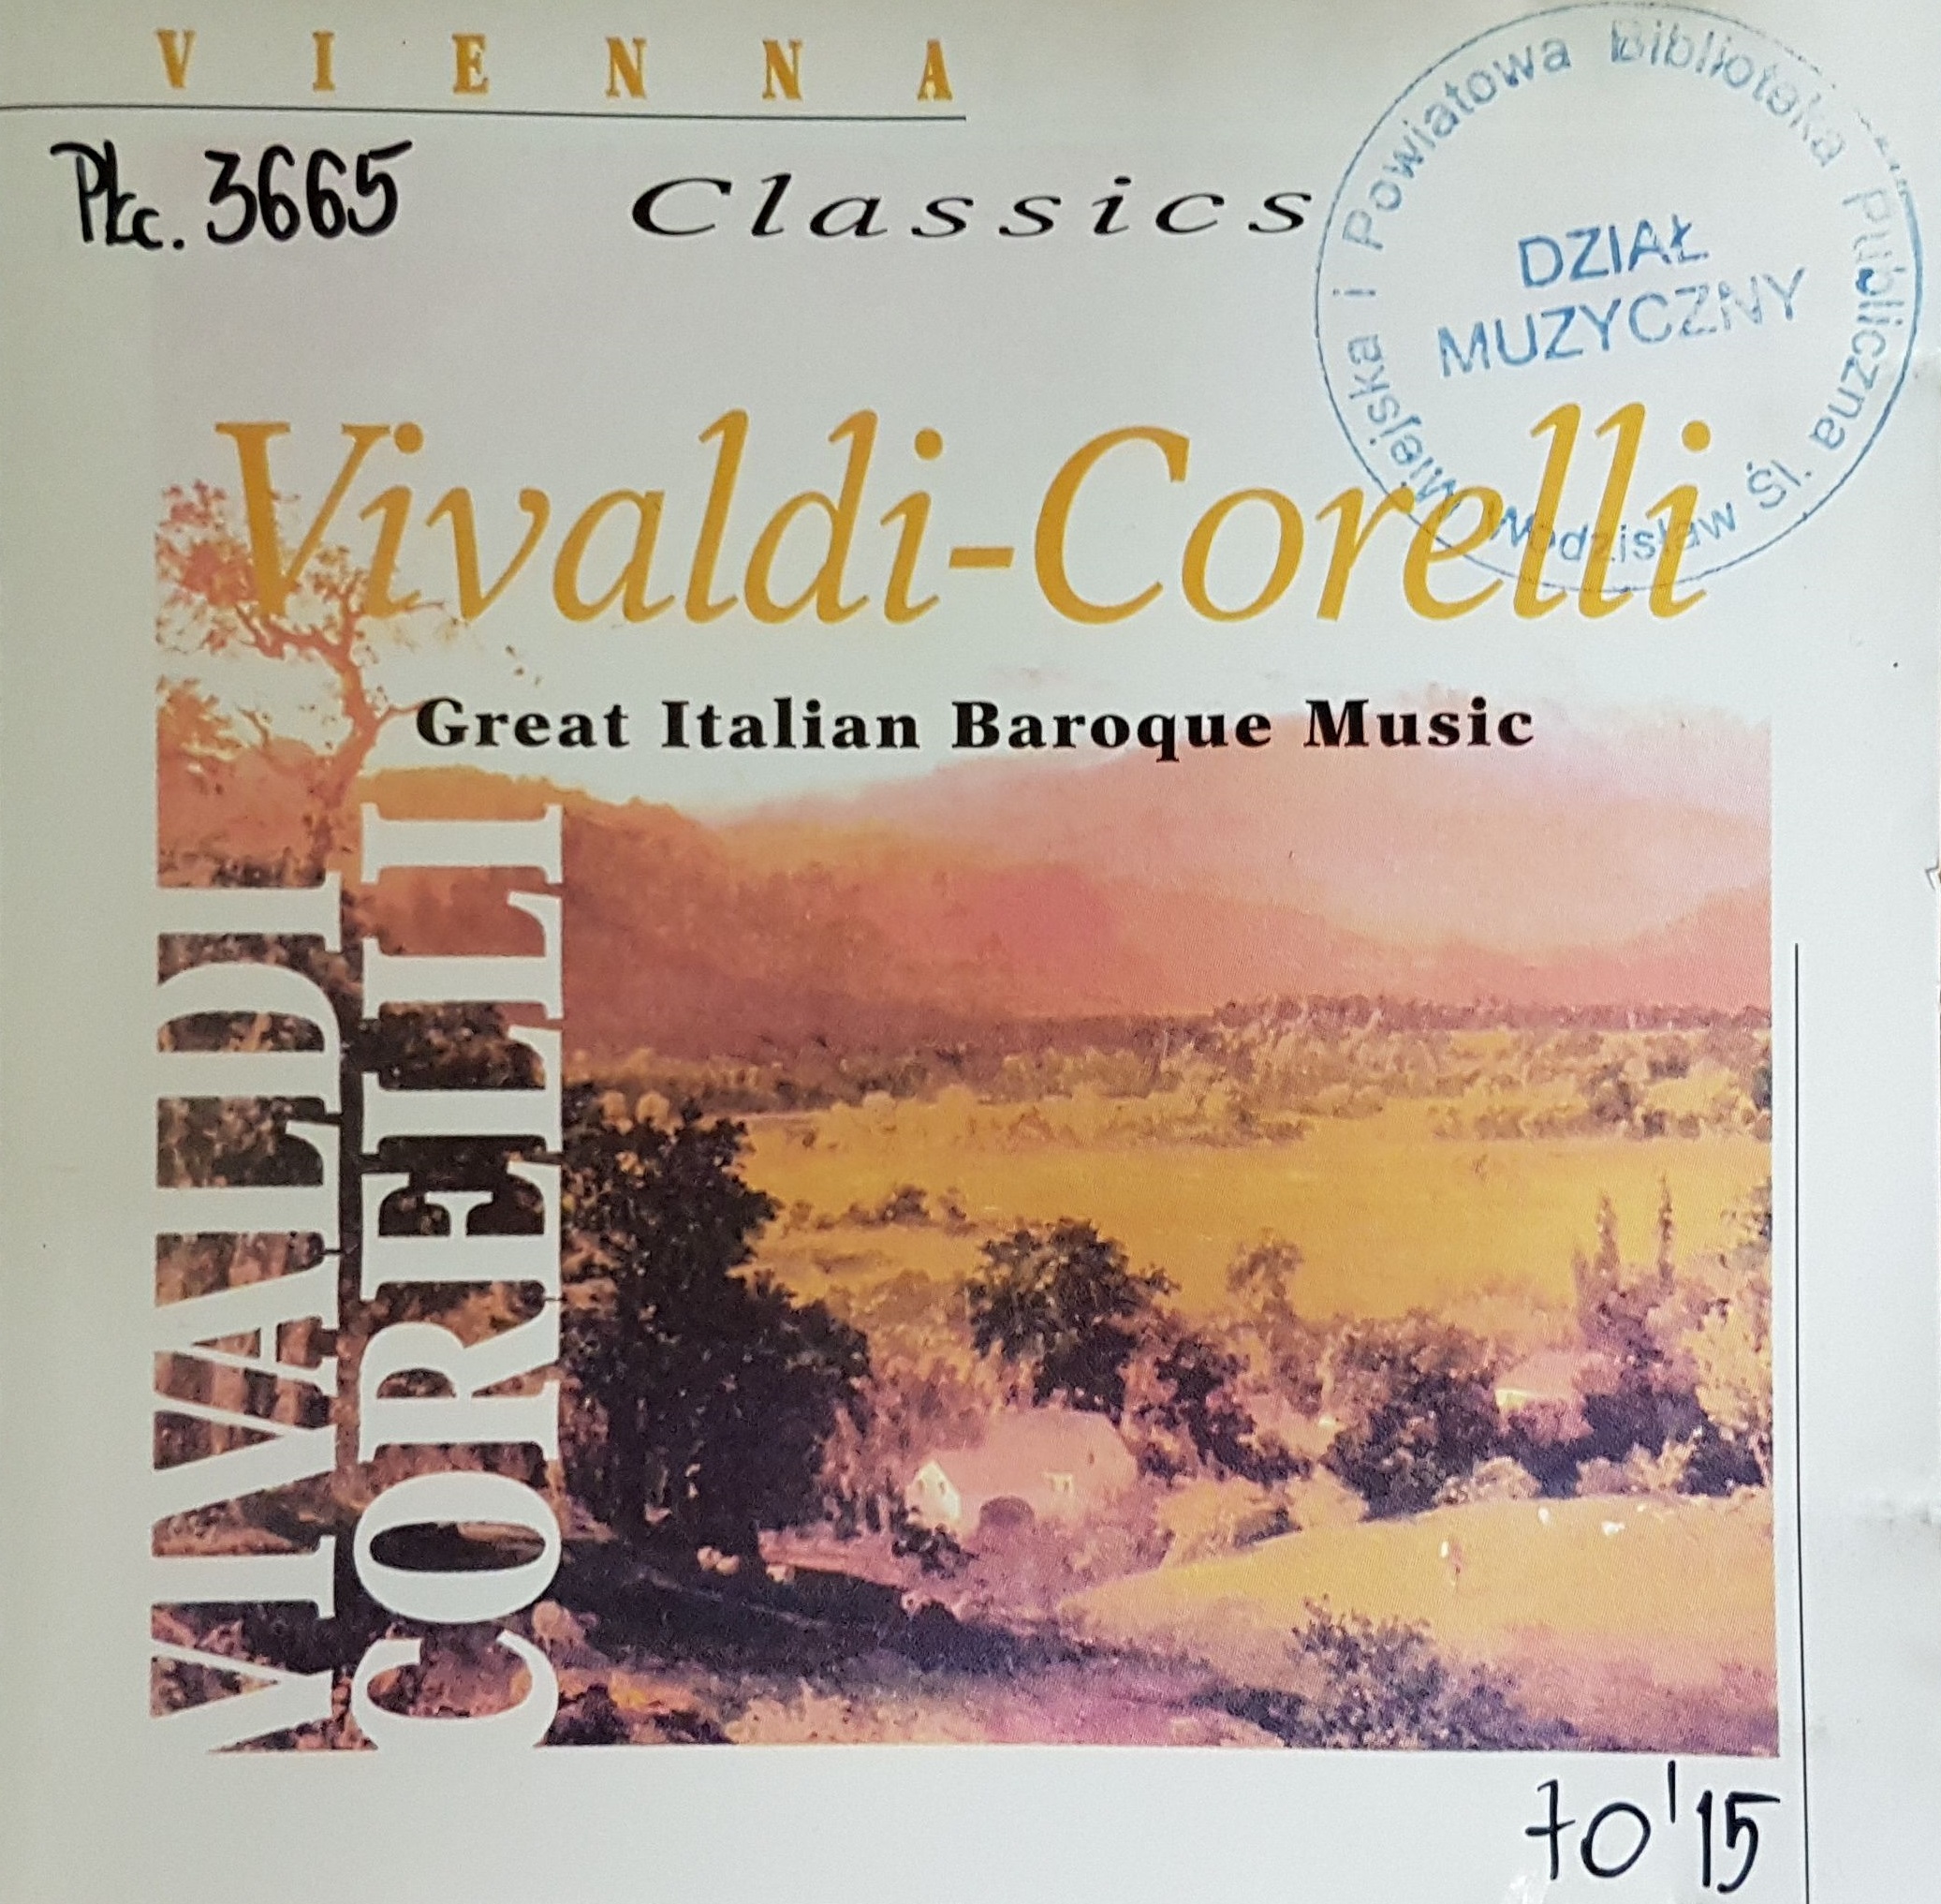 Vivaldi, Corelli – Great Italian Baroque Music